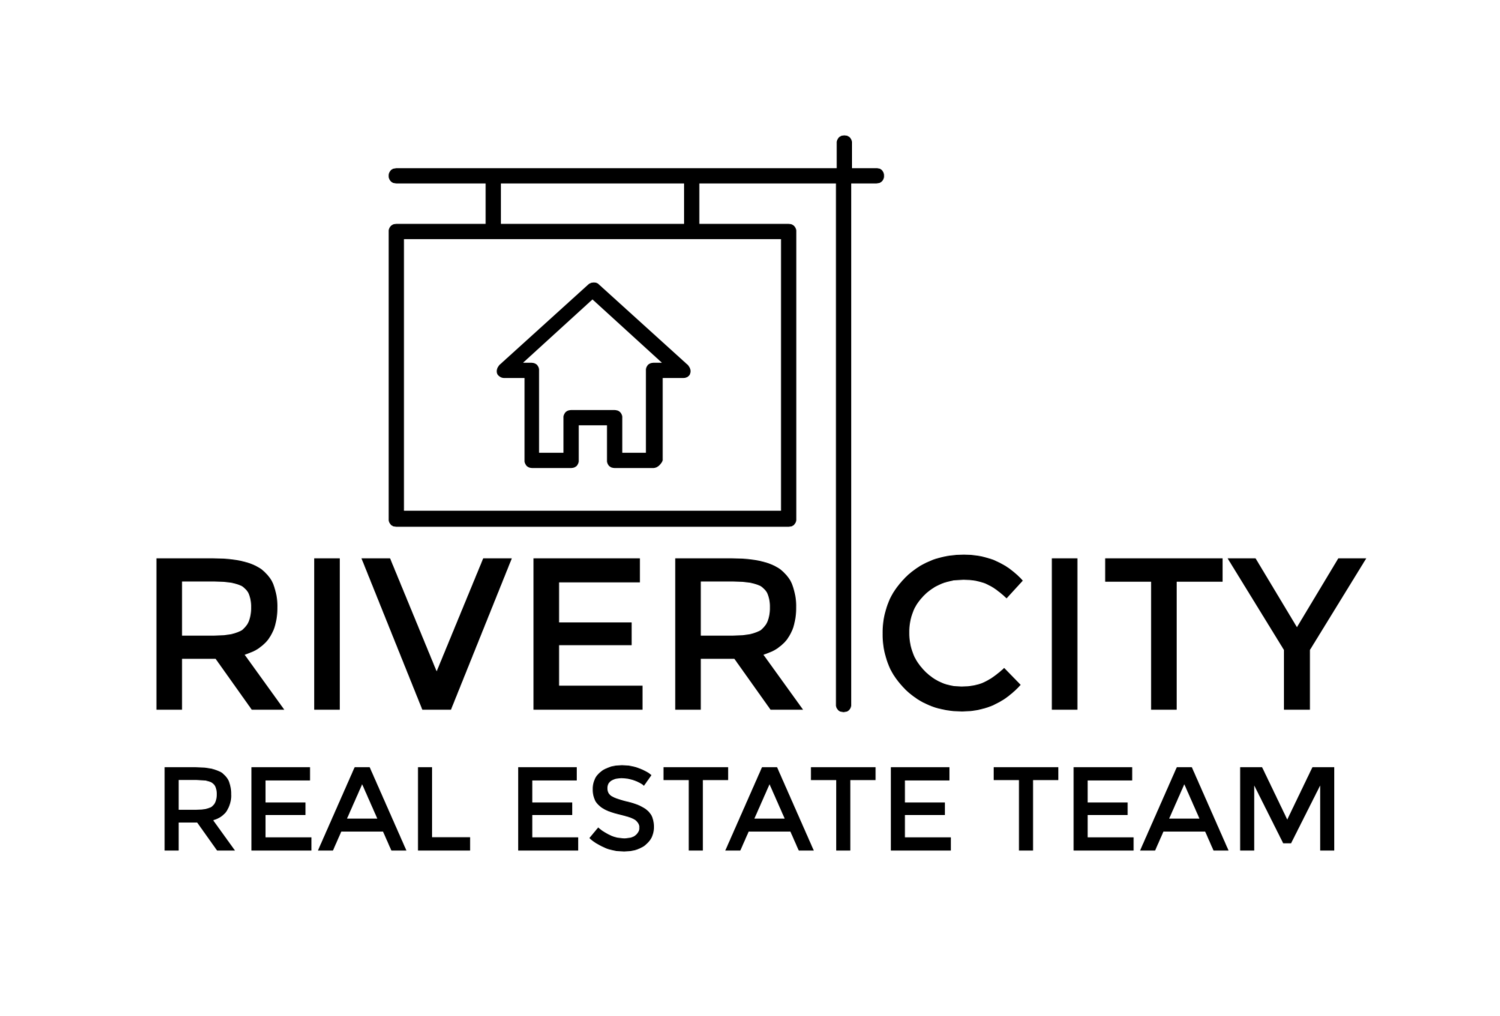 Real Estate Team Logo - River City Real Estate Team